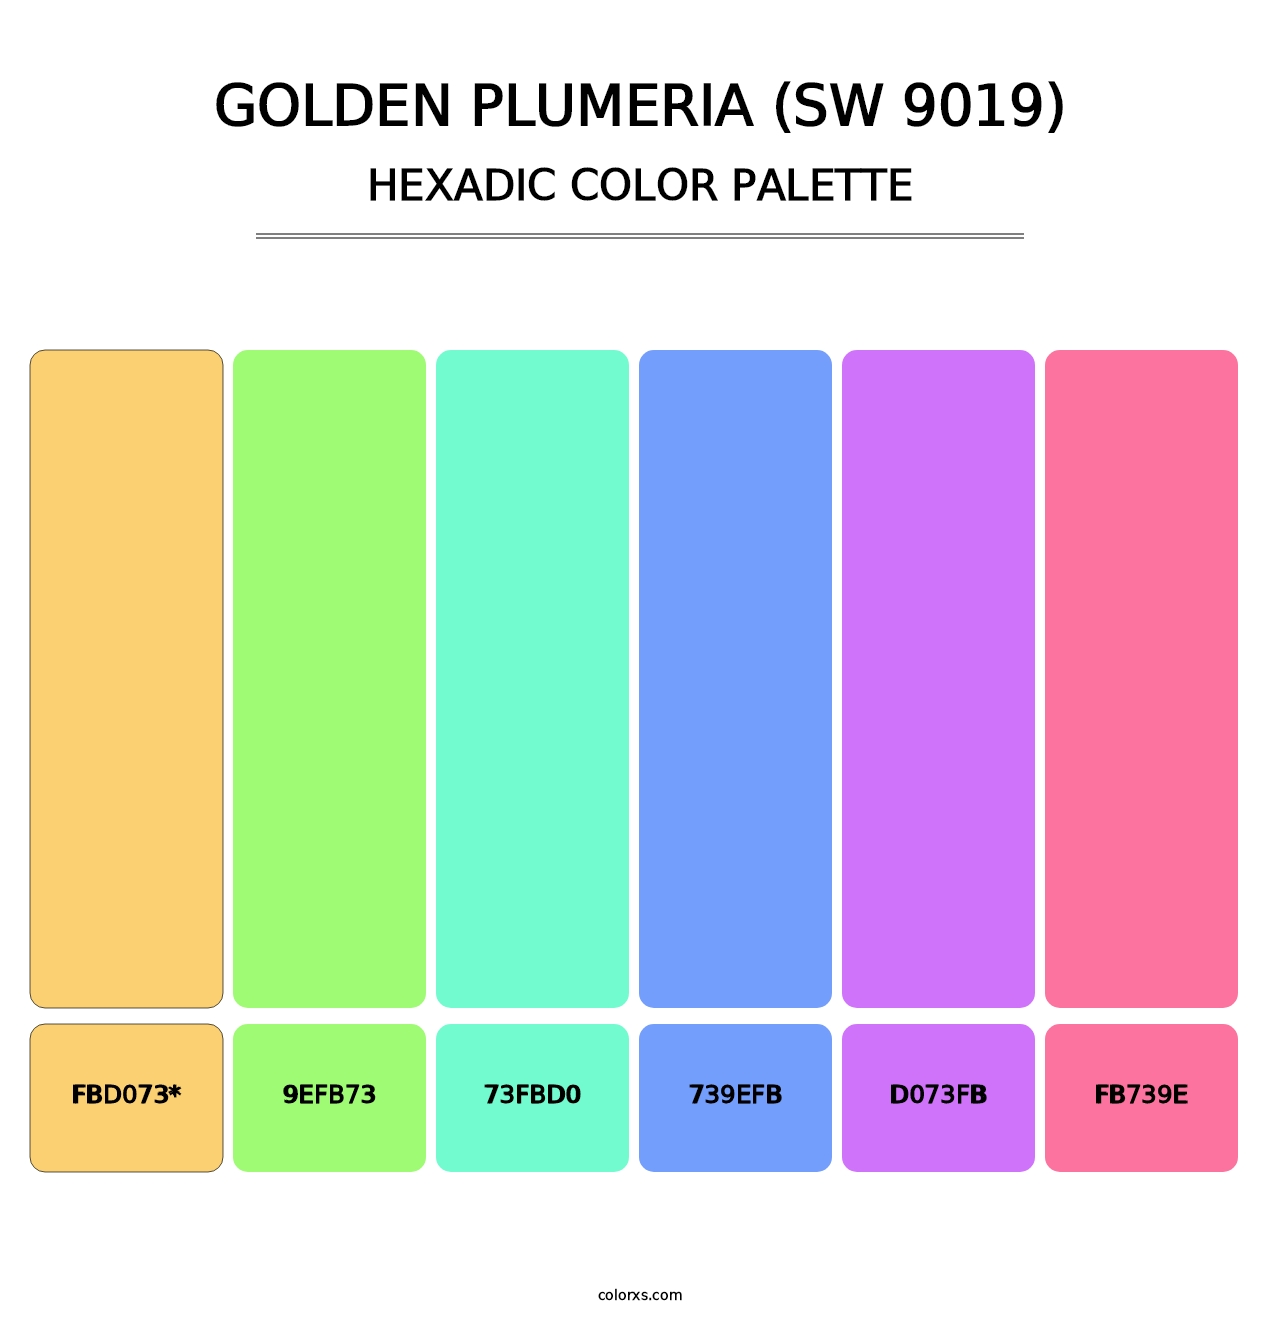 Golden Plumeria (SW 9019) - Hexadic Color Palette